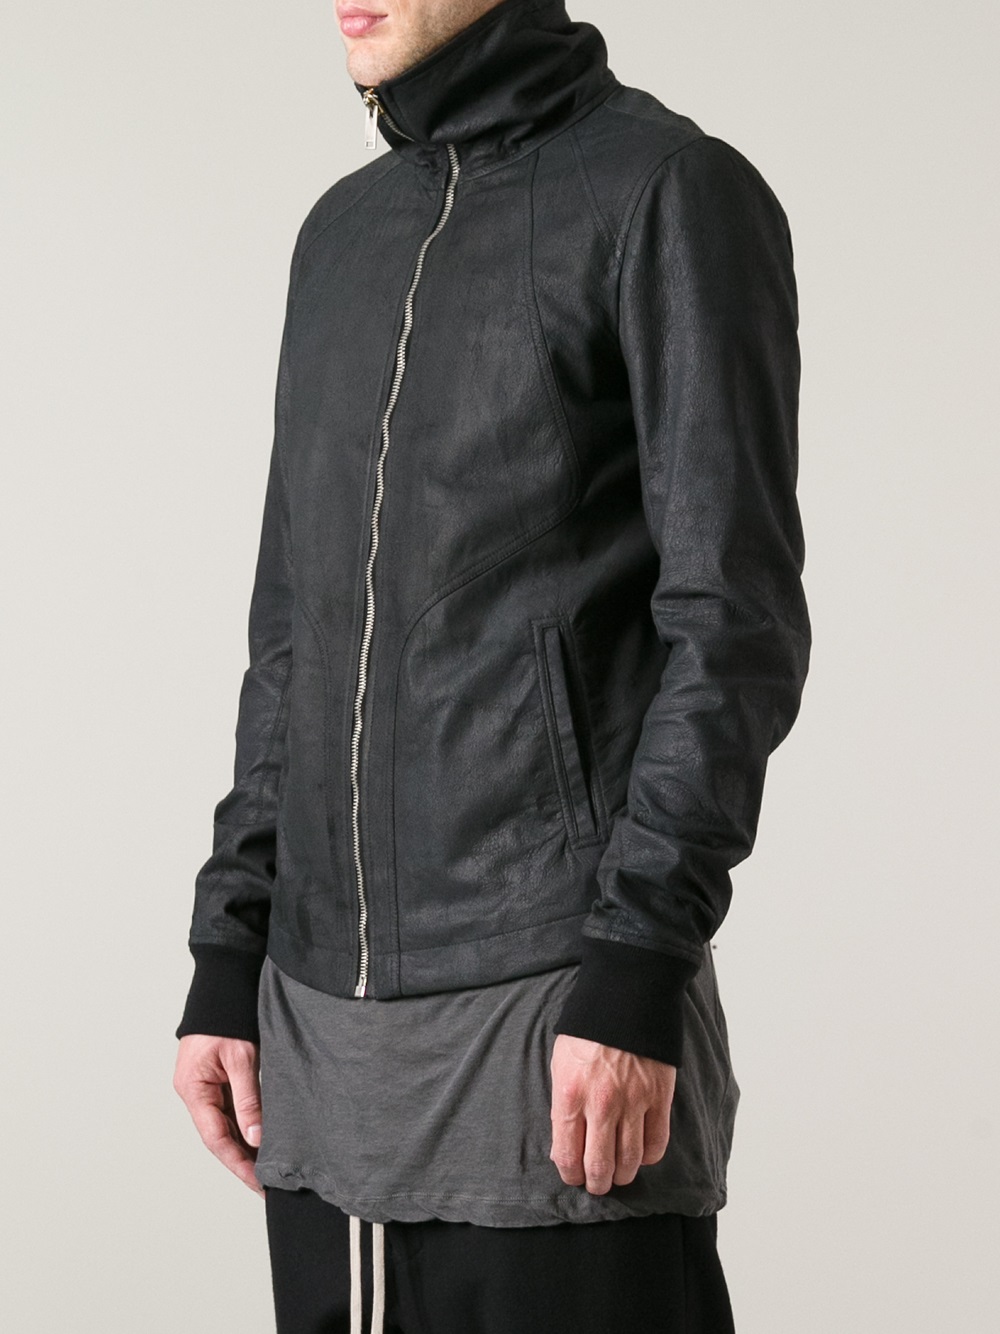 Rick Owens Intarsia High Neck Jacket in Black for Men | Lyst